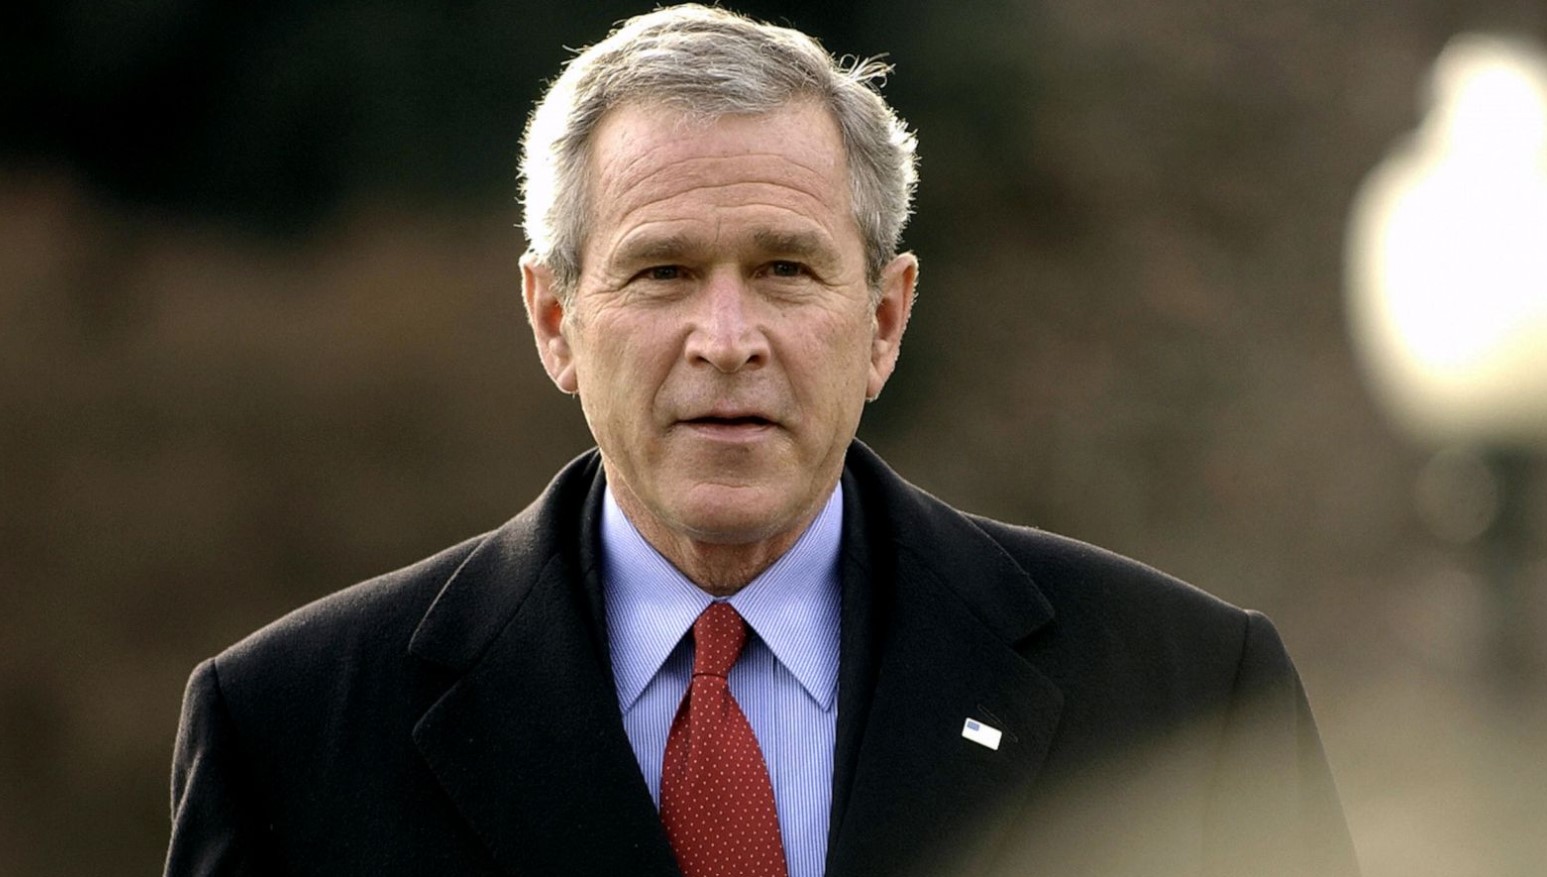 George W. Bush image